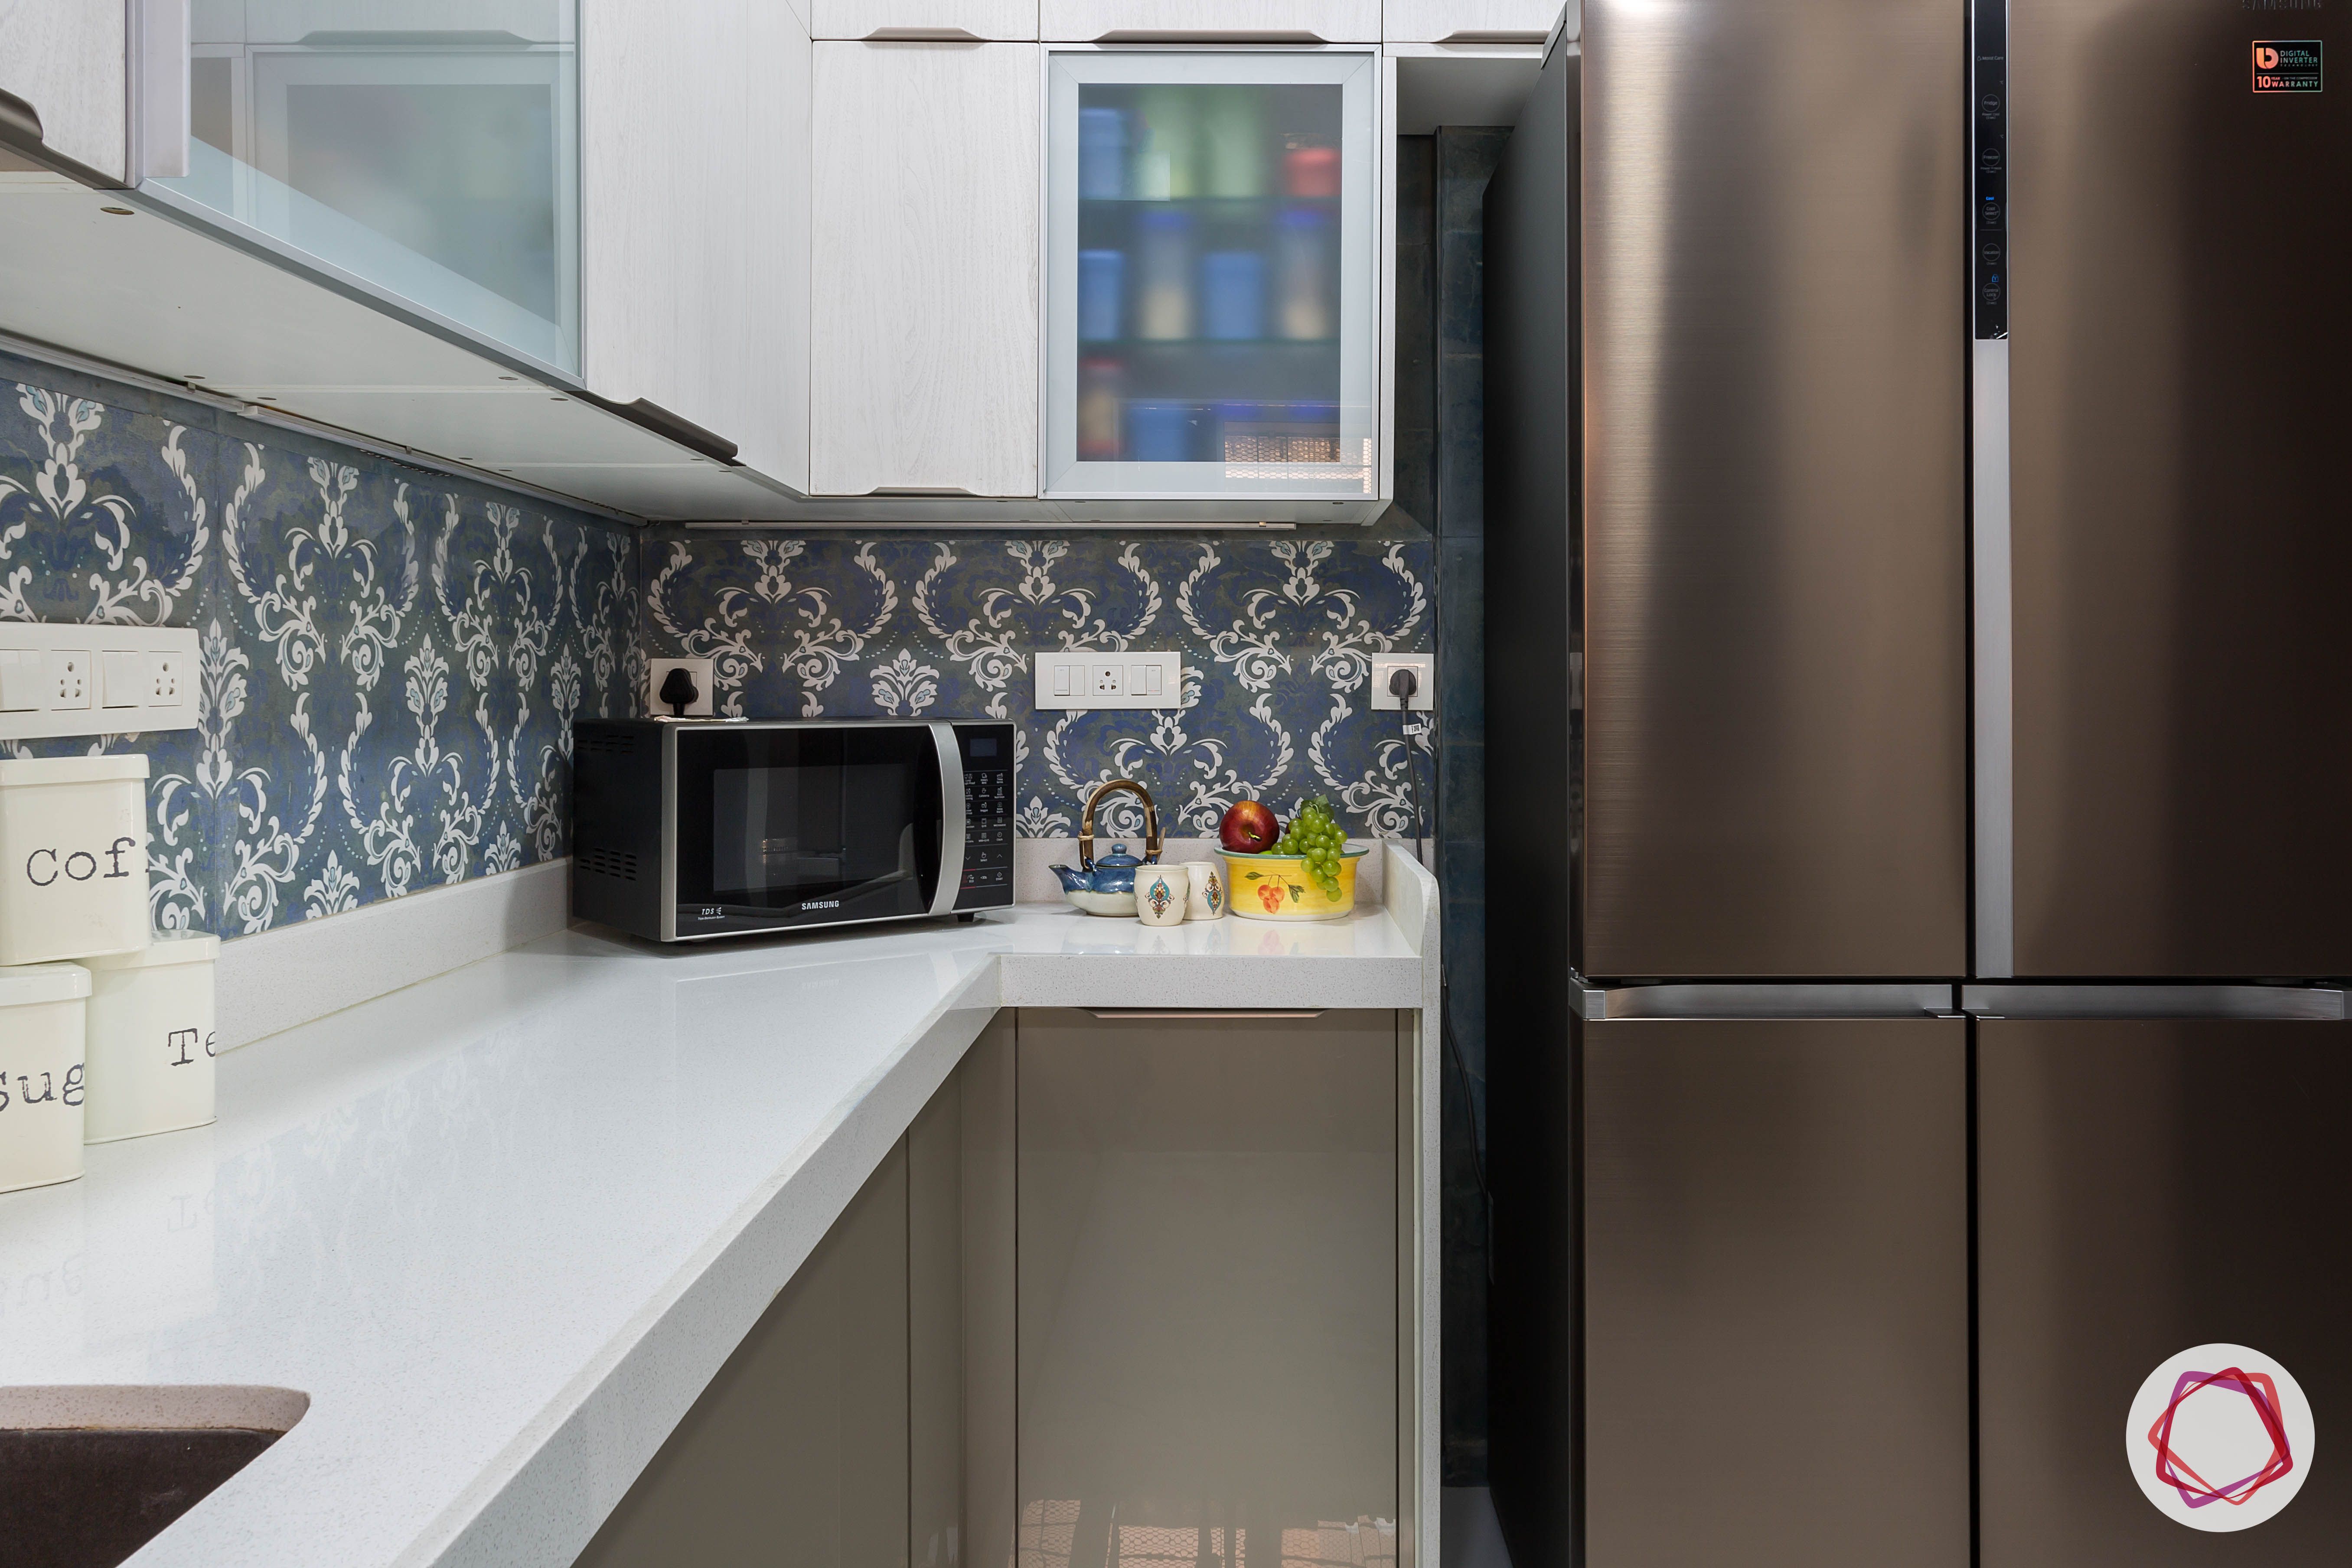 house-renovation-kitchen-cabinets-fridge-frosted-shutter-backsplash-microwave
